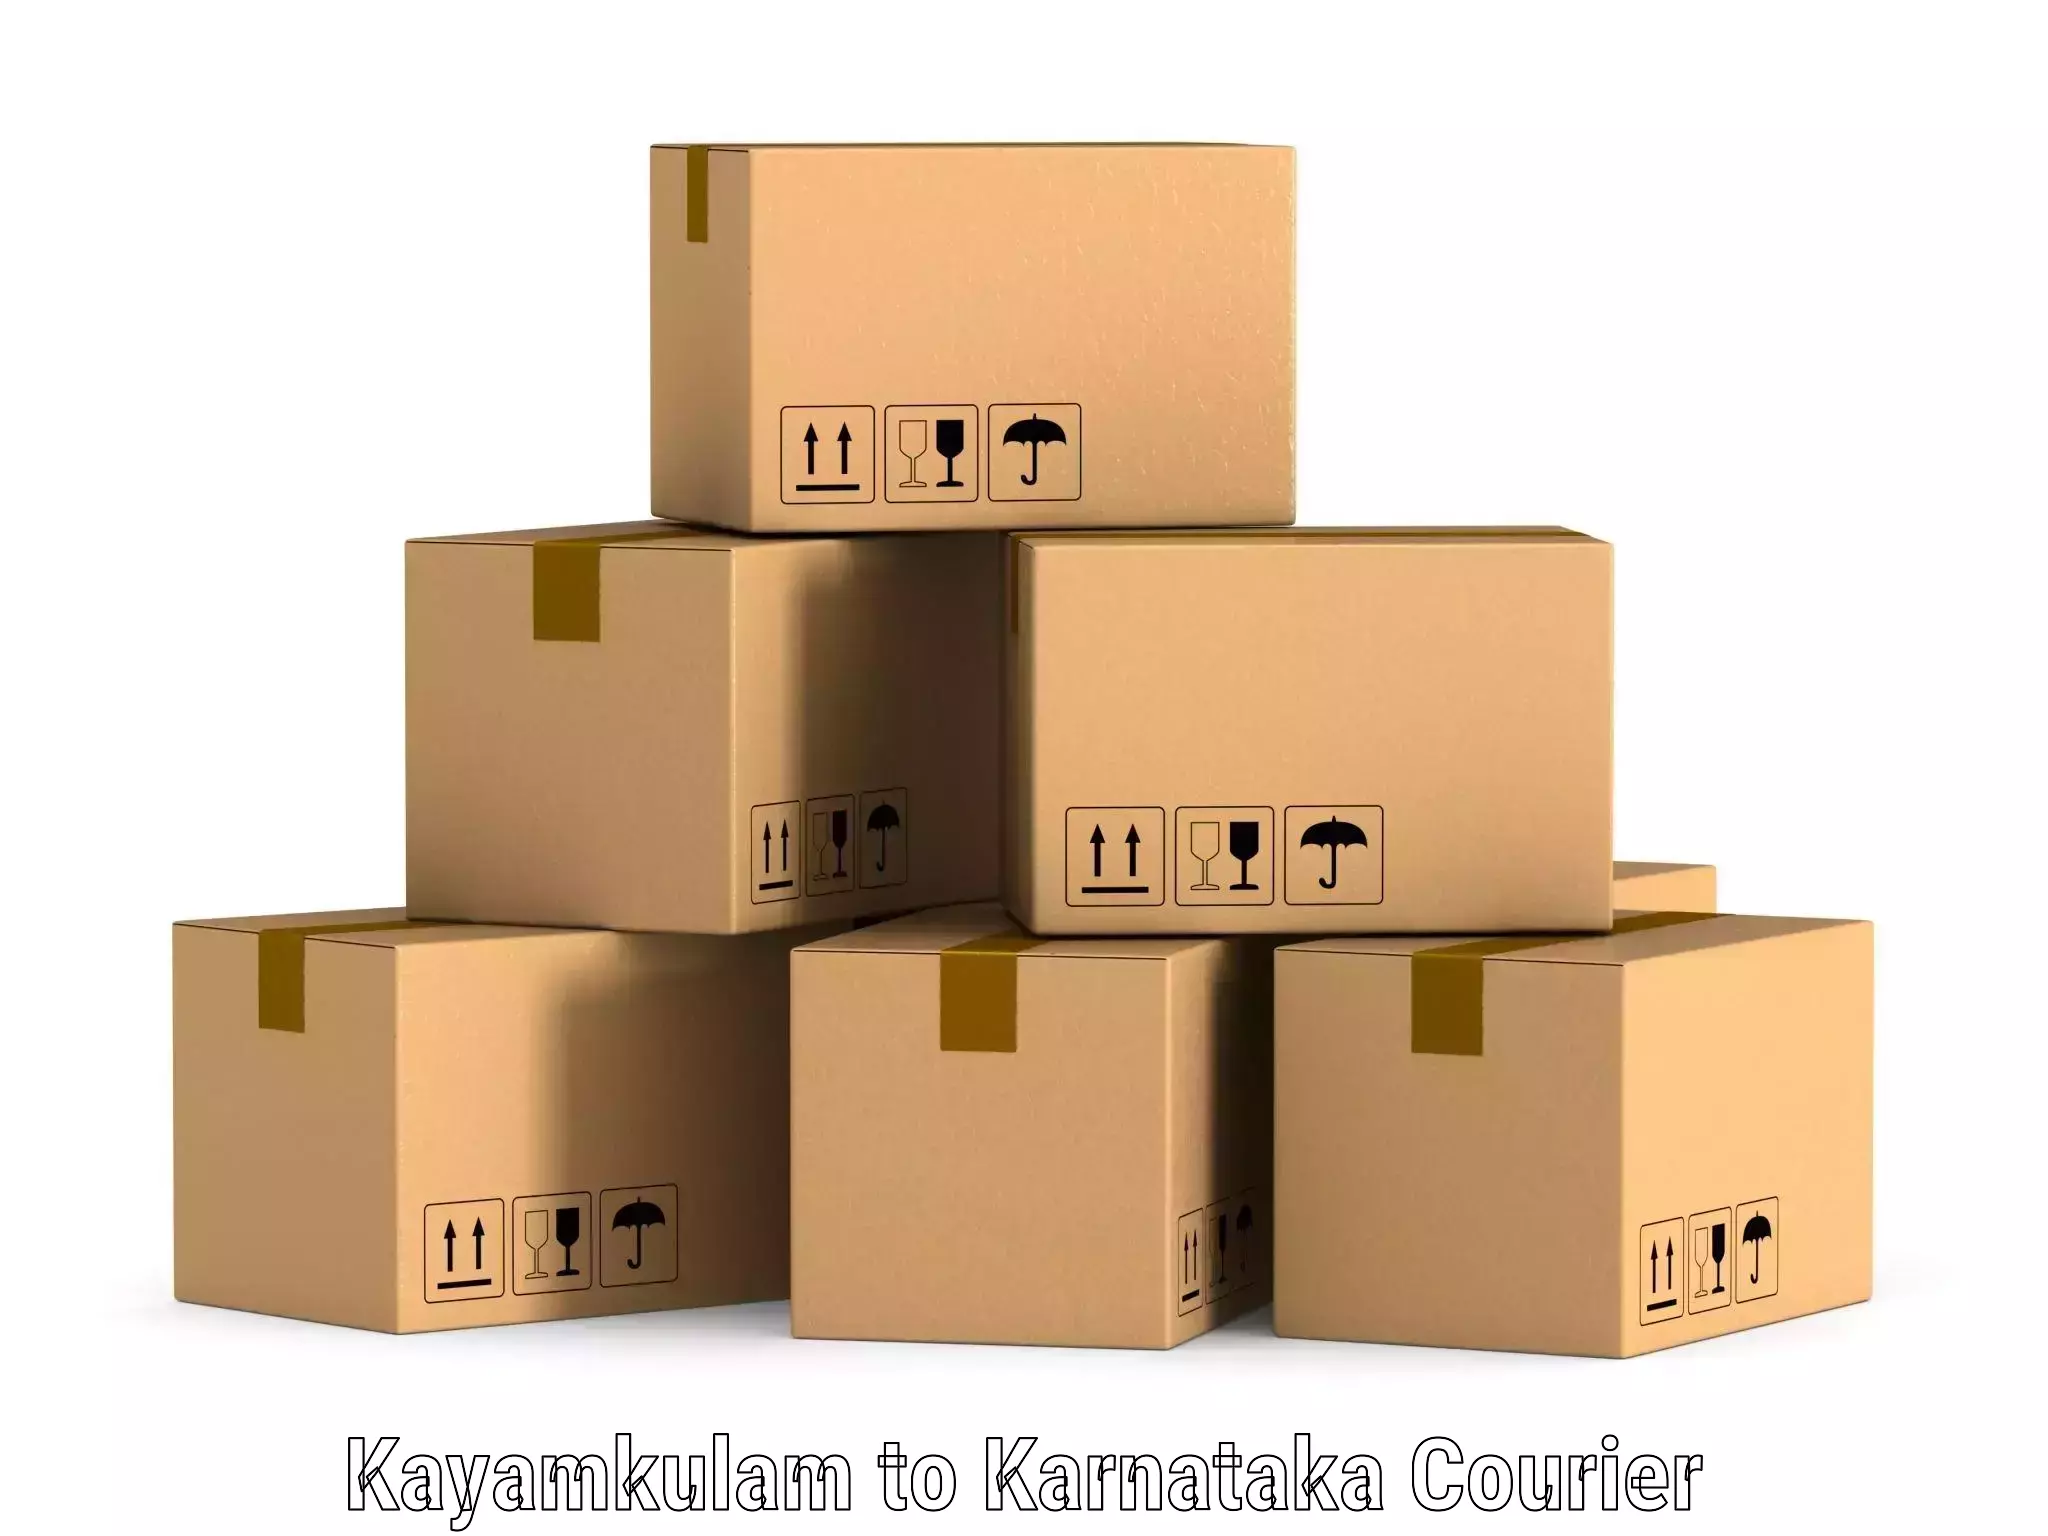 Modern courier technology Kayamkulam to Yellapur